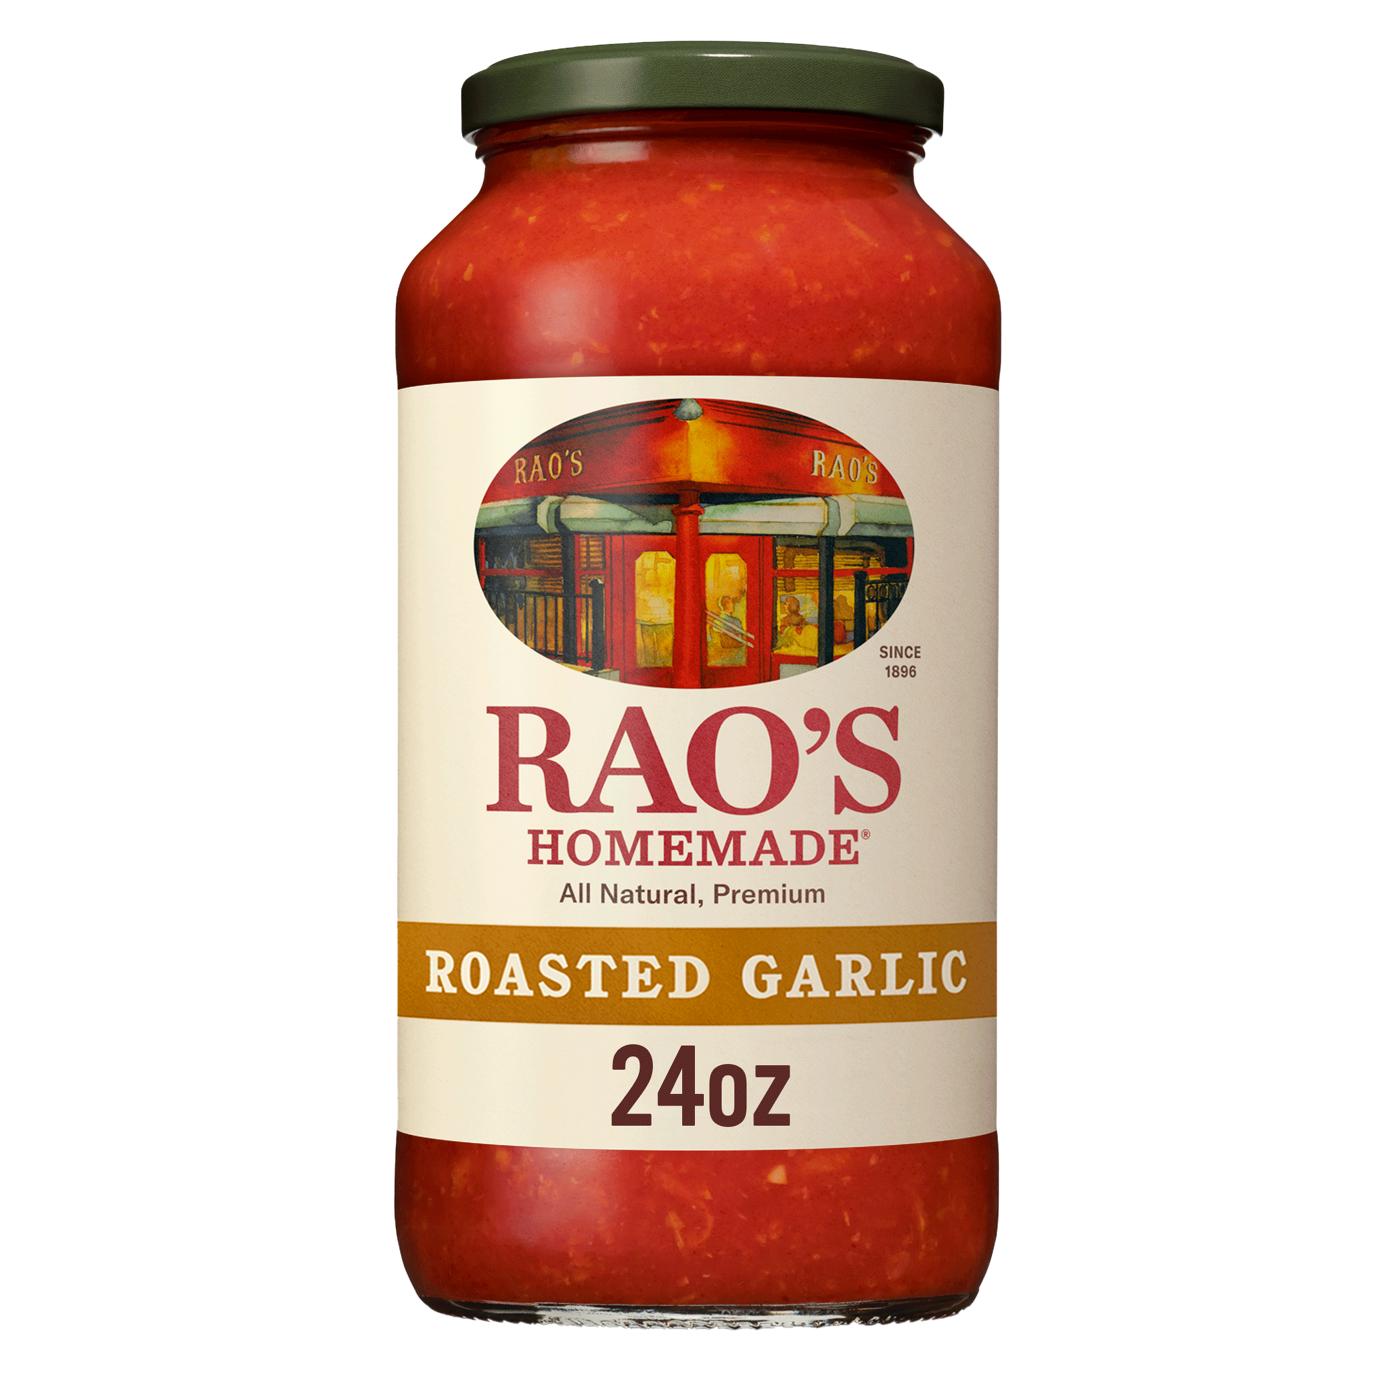 Rao's Homemade Roasted Garlic Pasta Sauce; image 1 of 2